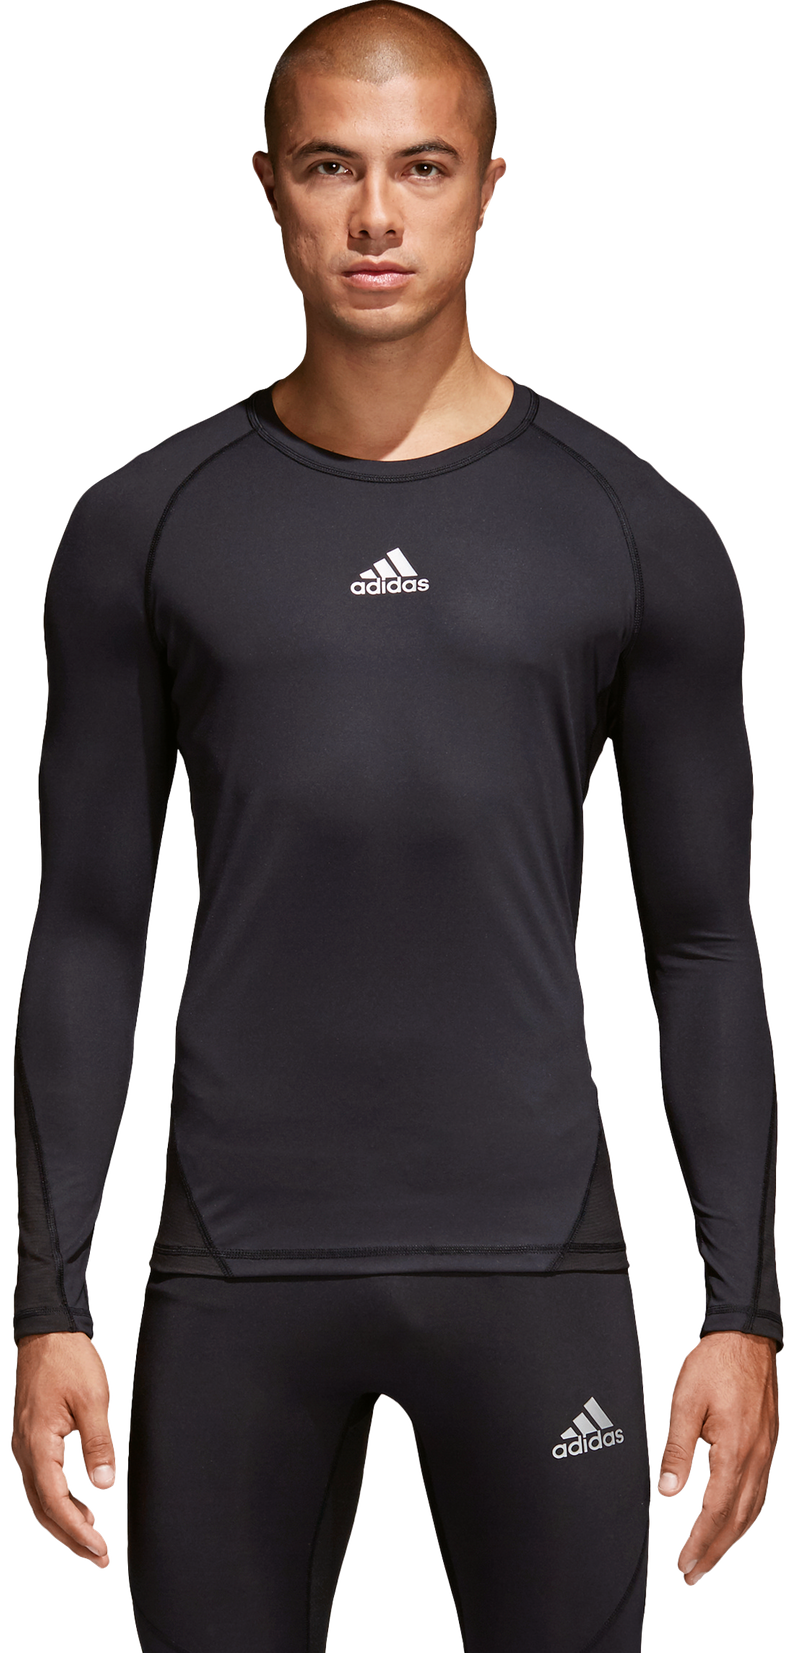 entrepreneur passage Make it heavy adidas Alphaskin Sport Shirt Longsleeve - Black